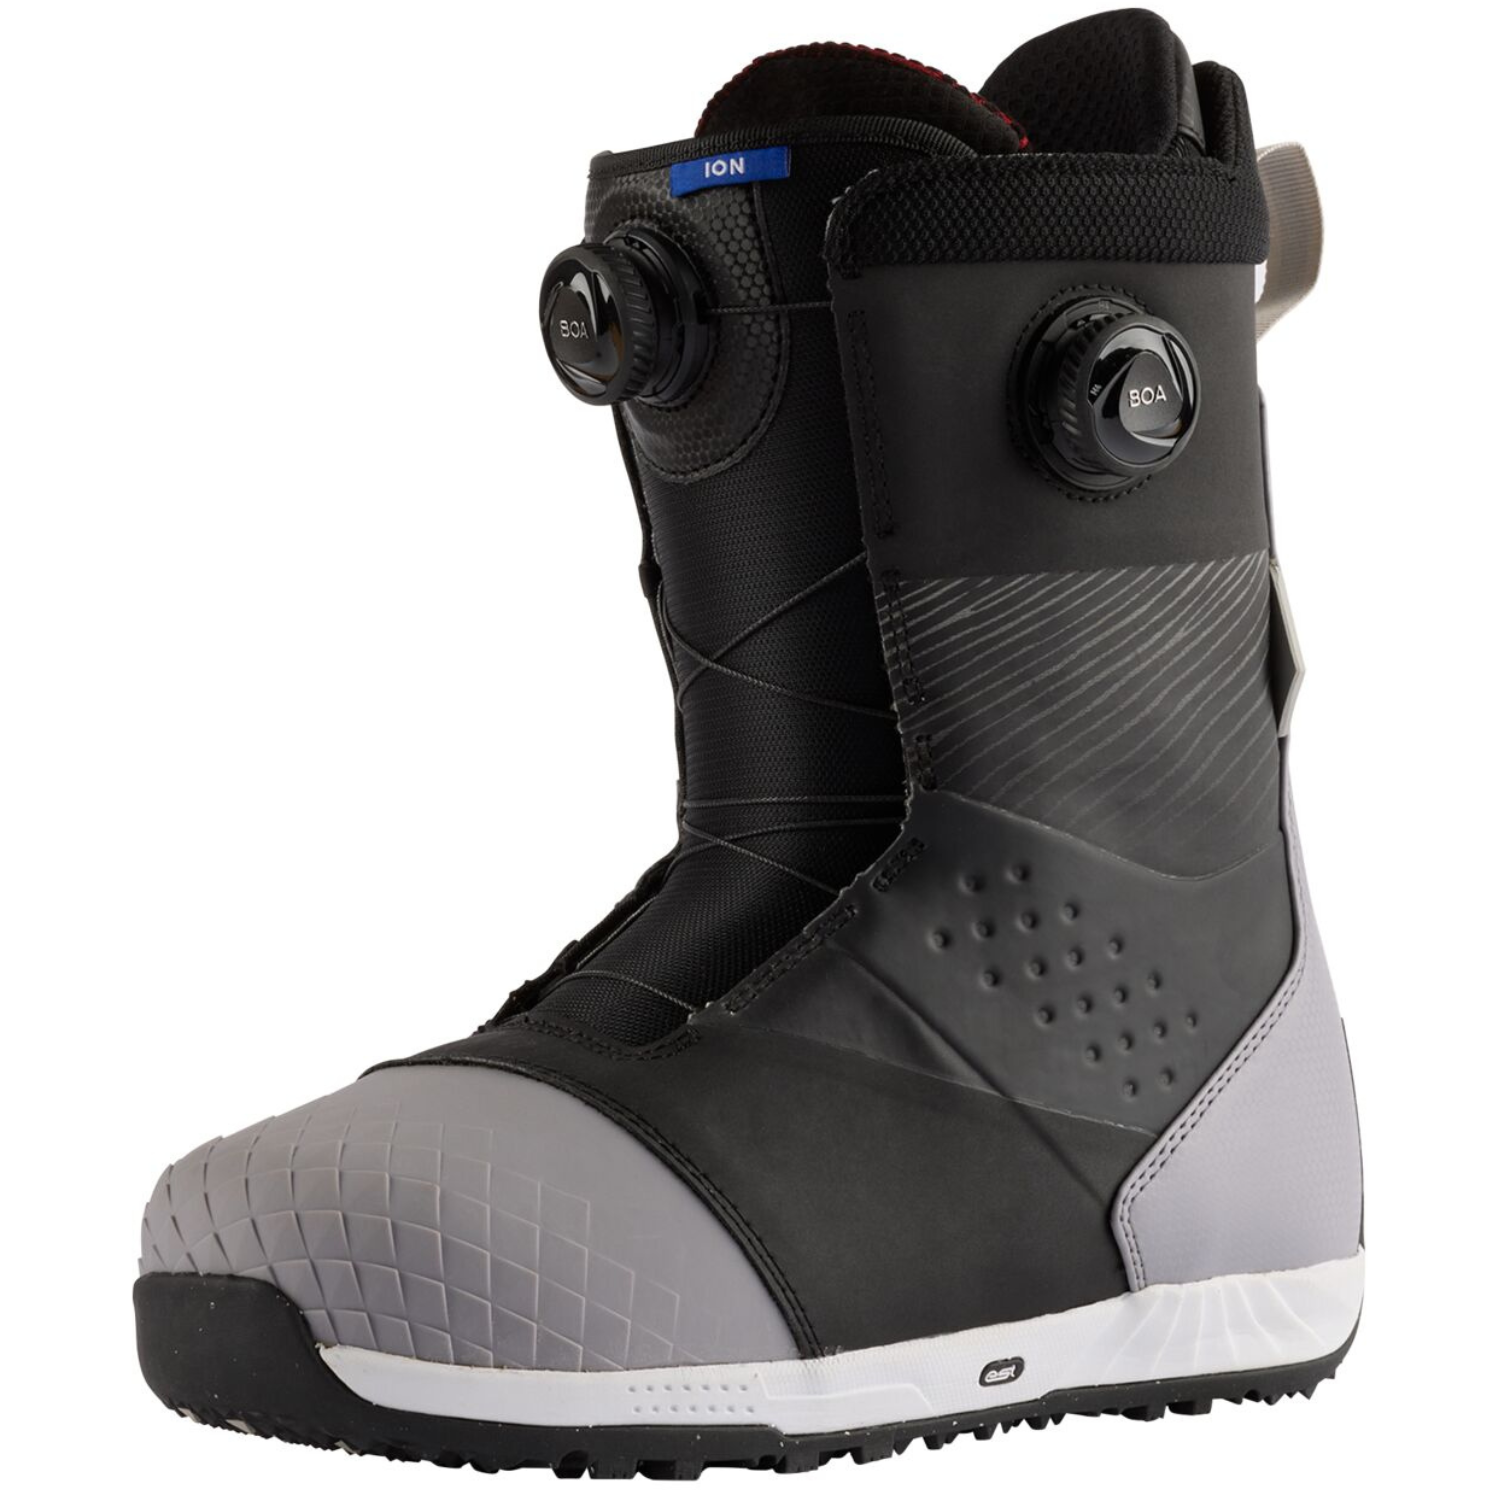 Burton Ion Boa Men's Snowboarding Boots For Sale